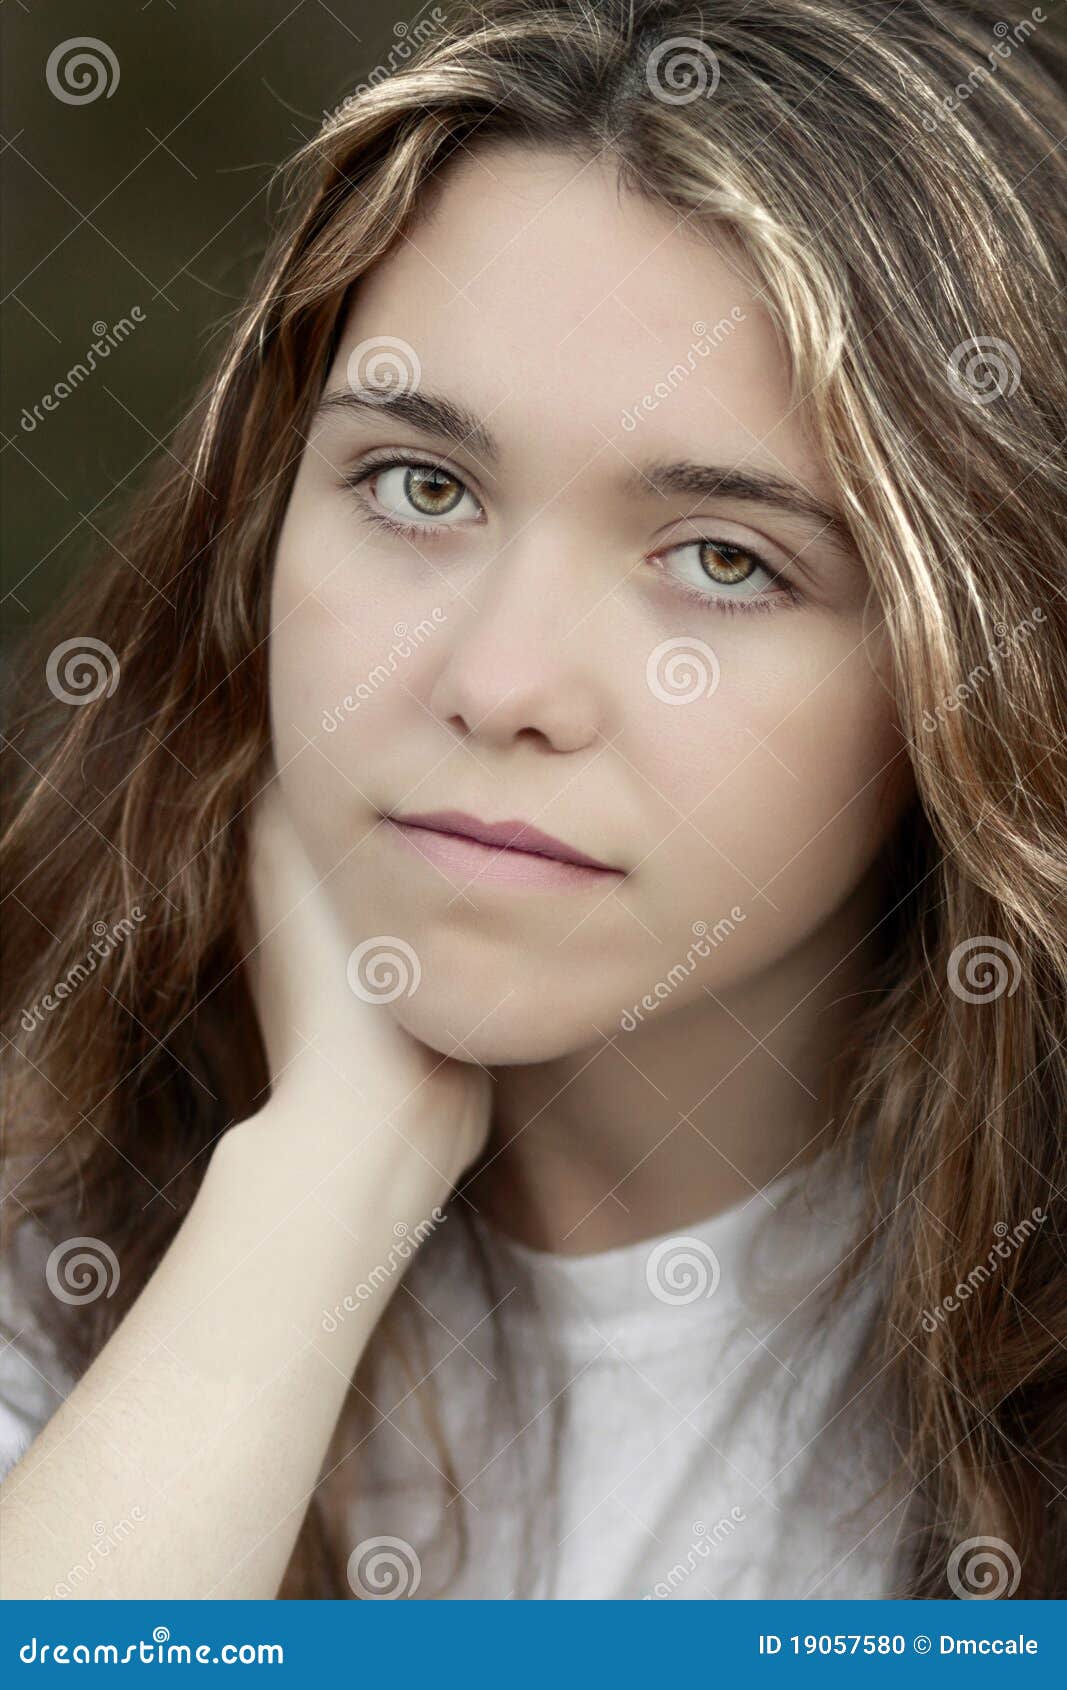 Teen girl depressed stock photo. Image of depressed ...
